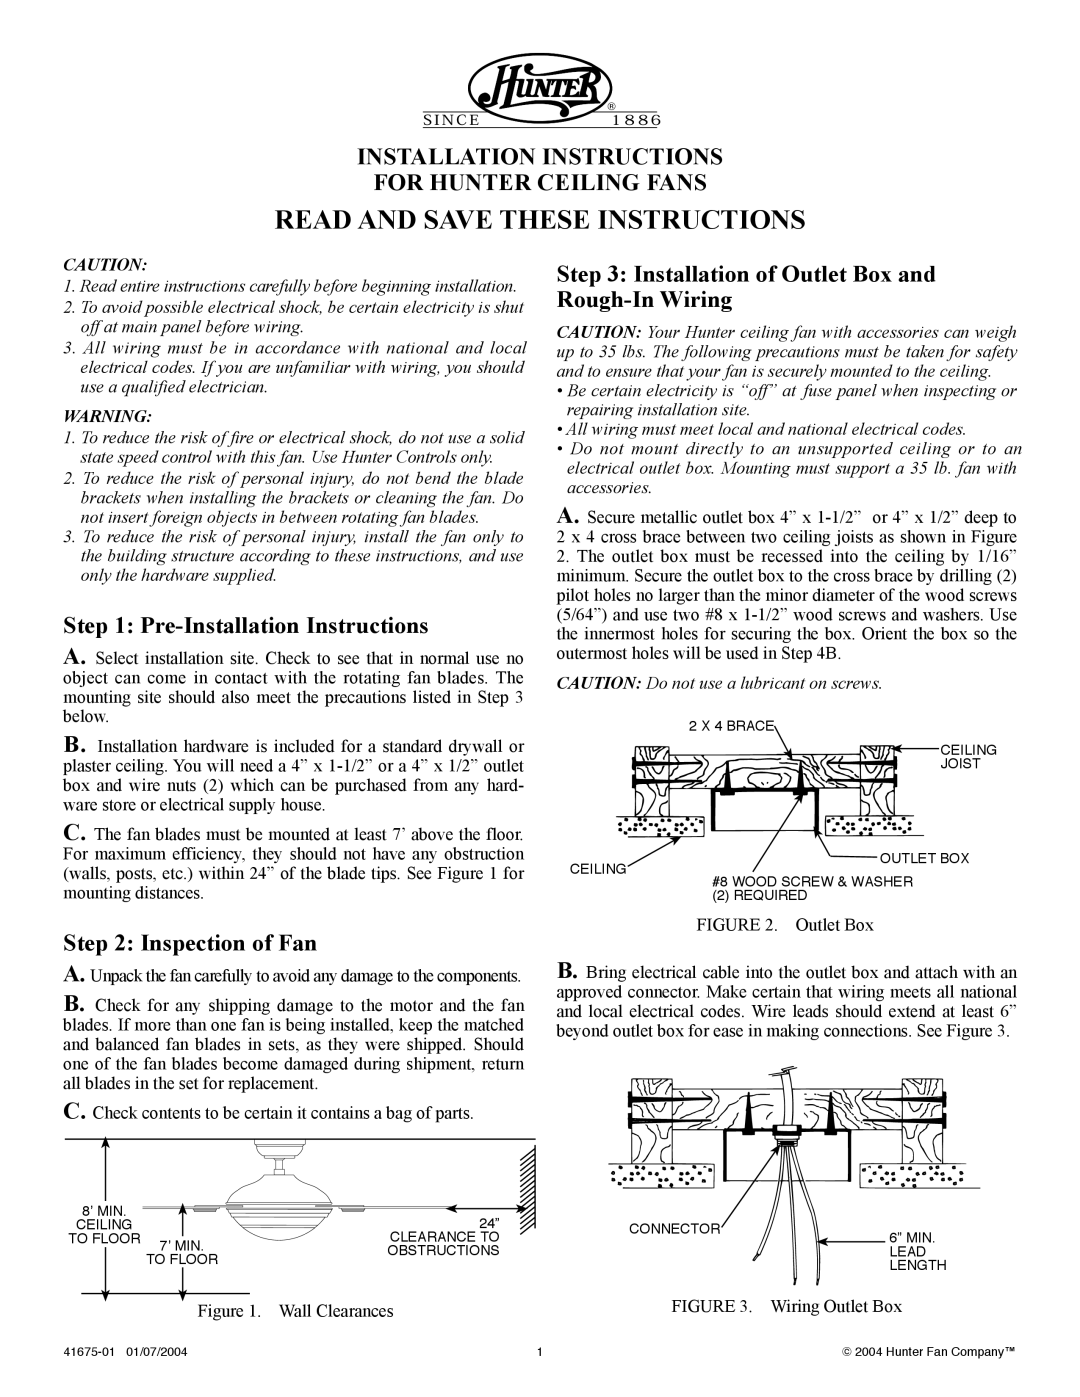 Hunter Fan 41675-01 installation instructions Read And Save These Instructions, Pre-InstallationInstructions 